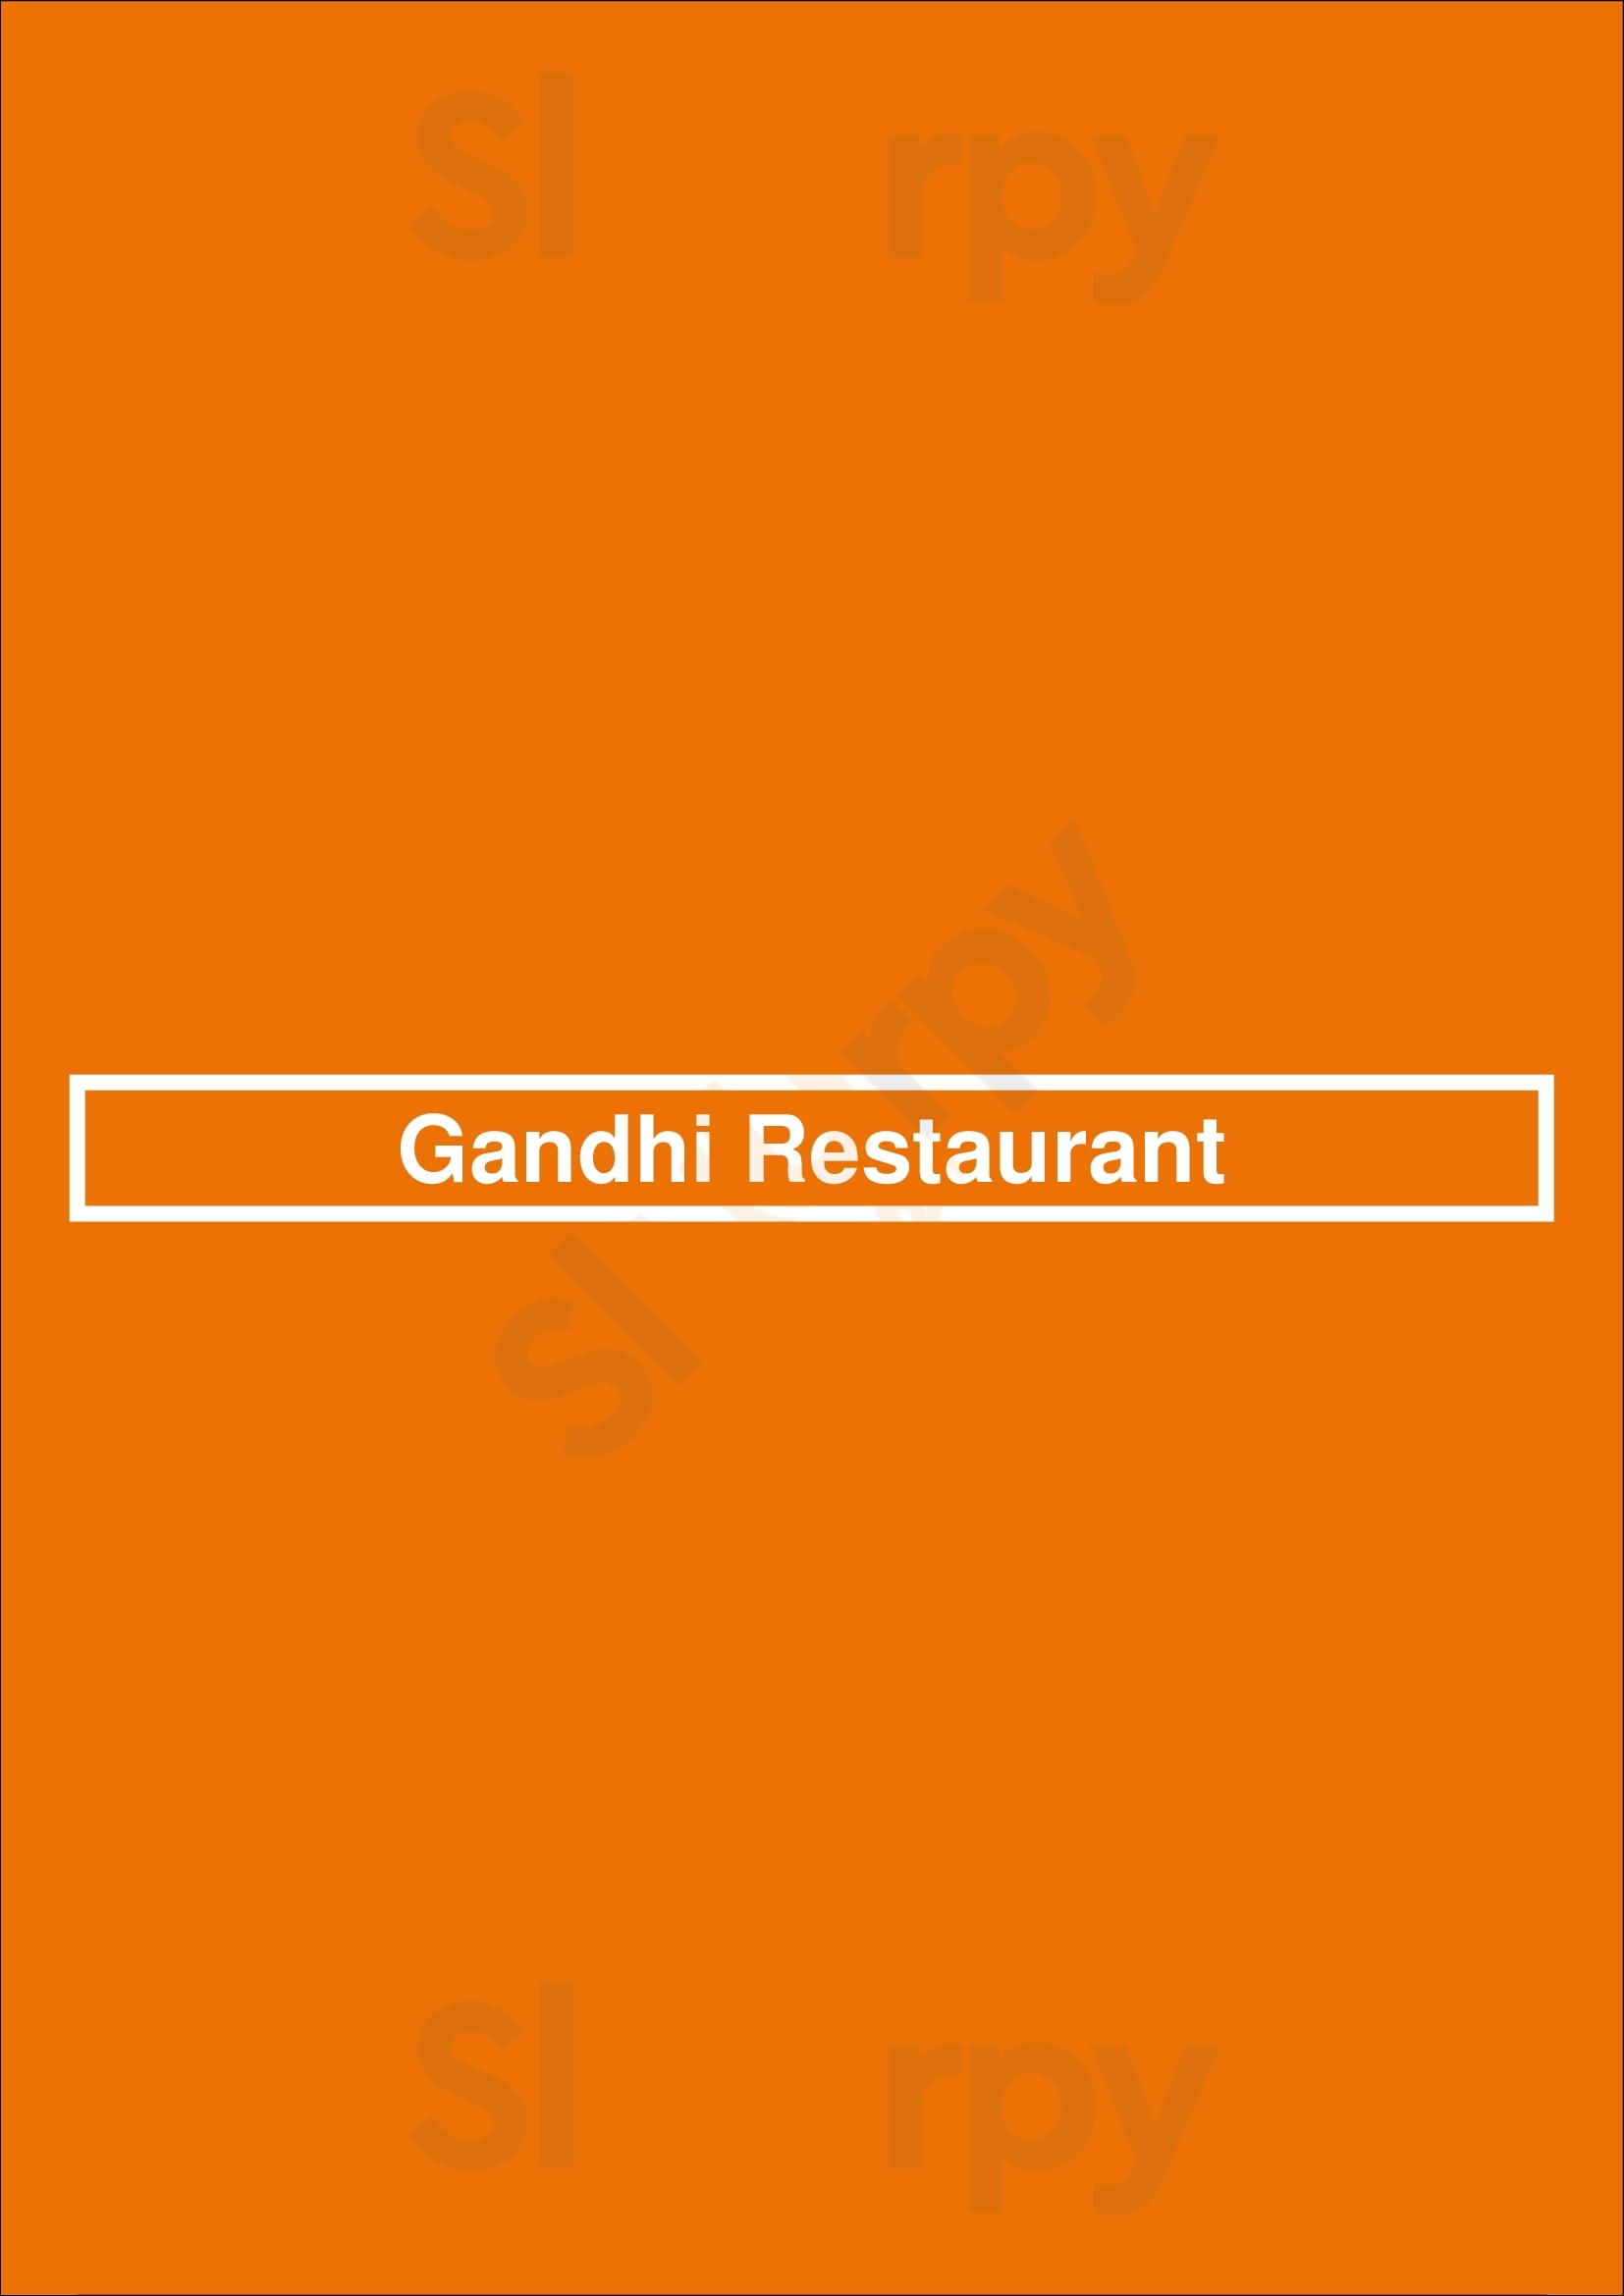 Gandhi Restaurant Amsterdam Menu - 1